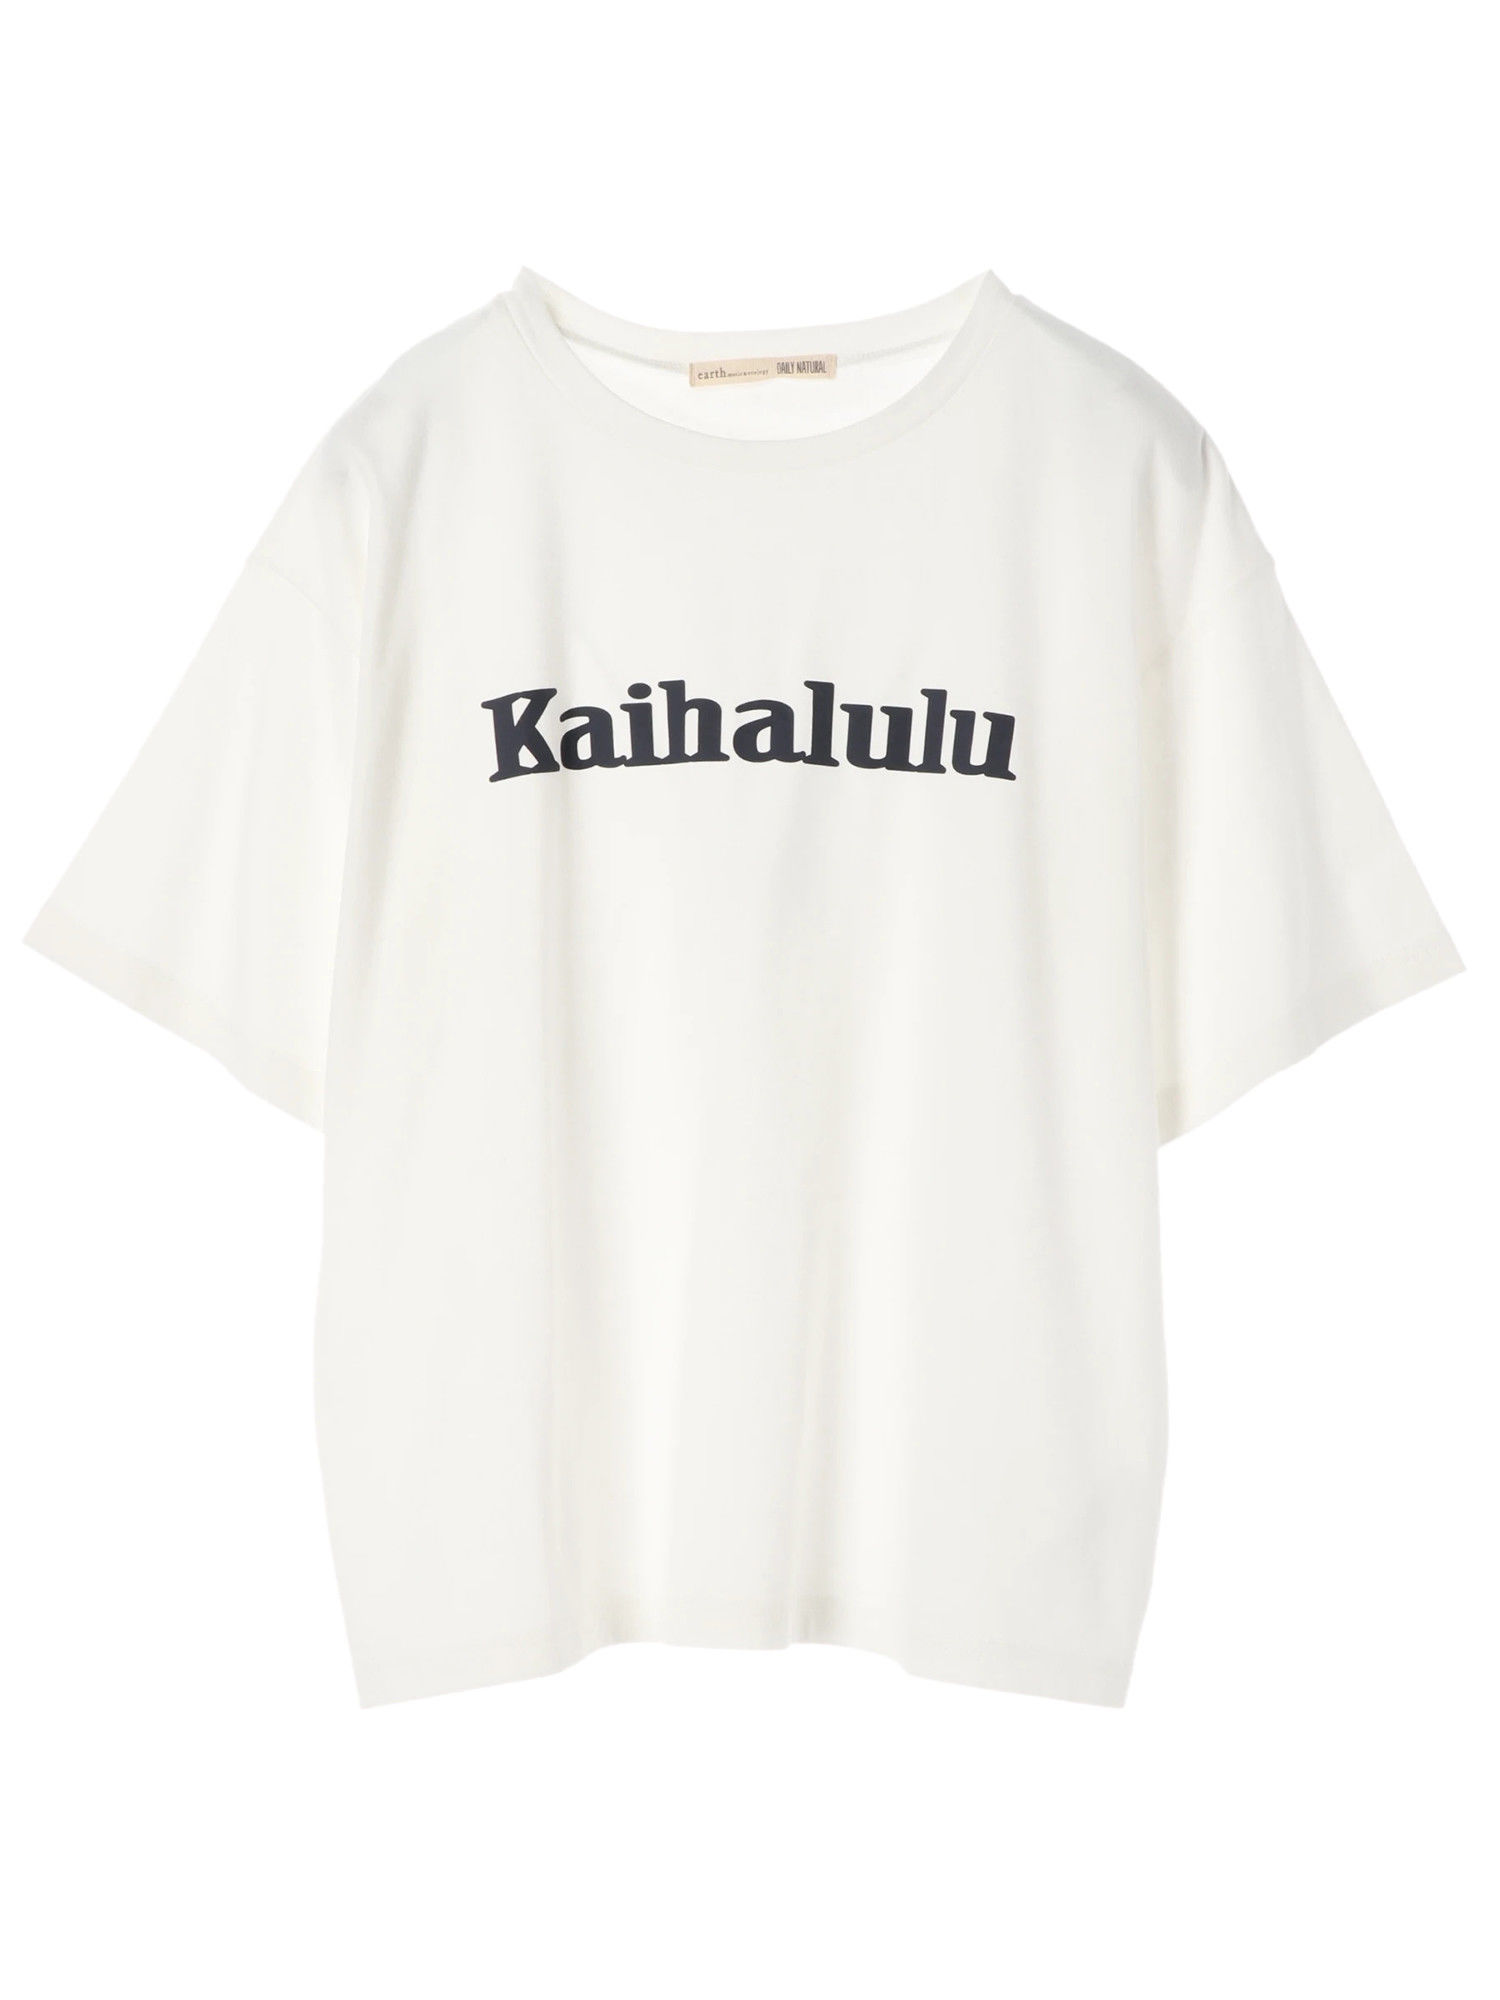 Kaihaluluオーガニックコットンbigtシャツ 品番 Emew Earth Music Ecology アースミュージックアンドエコロジー のレディースファッション通販 Shoplist ショップリスト